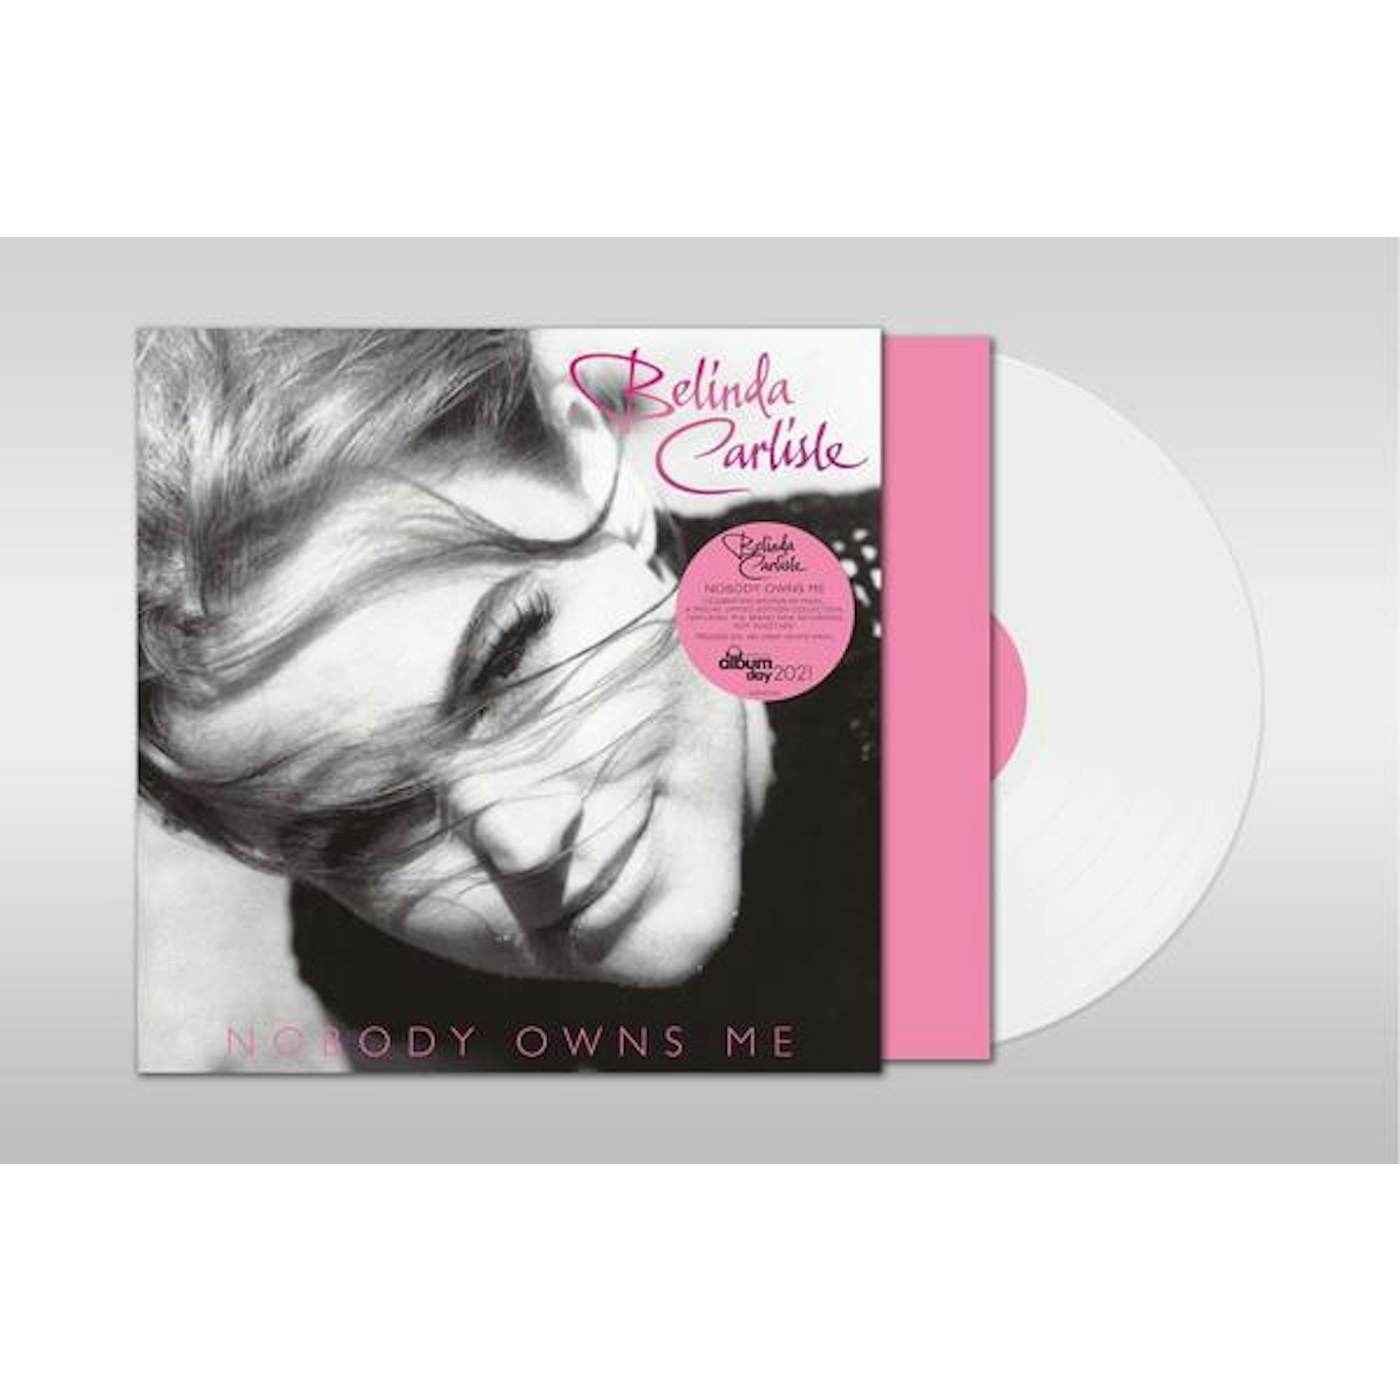 Belinda Carlisle LP Vinyl Record - Nobody Owns Me (White Vinyl) (Ex-Uk)